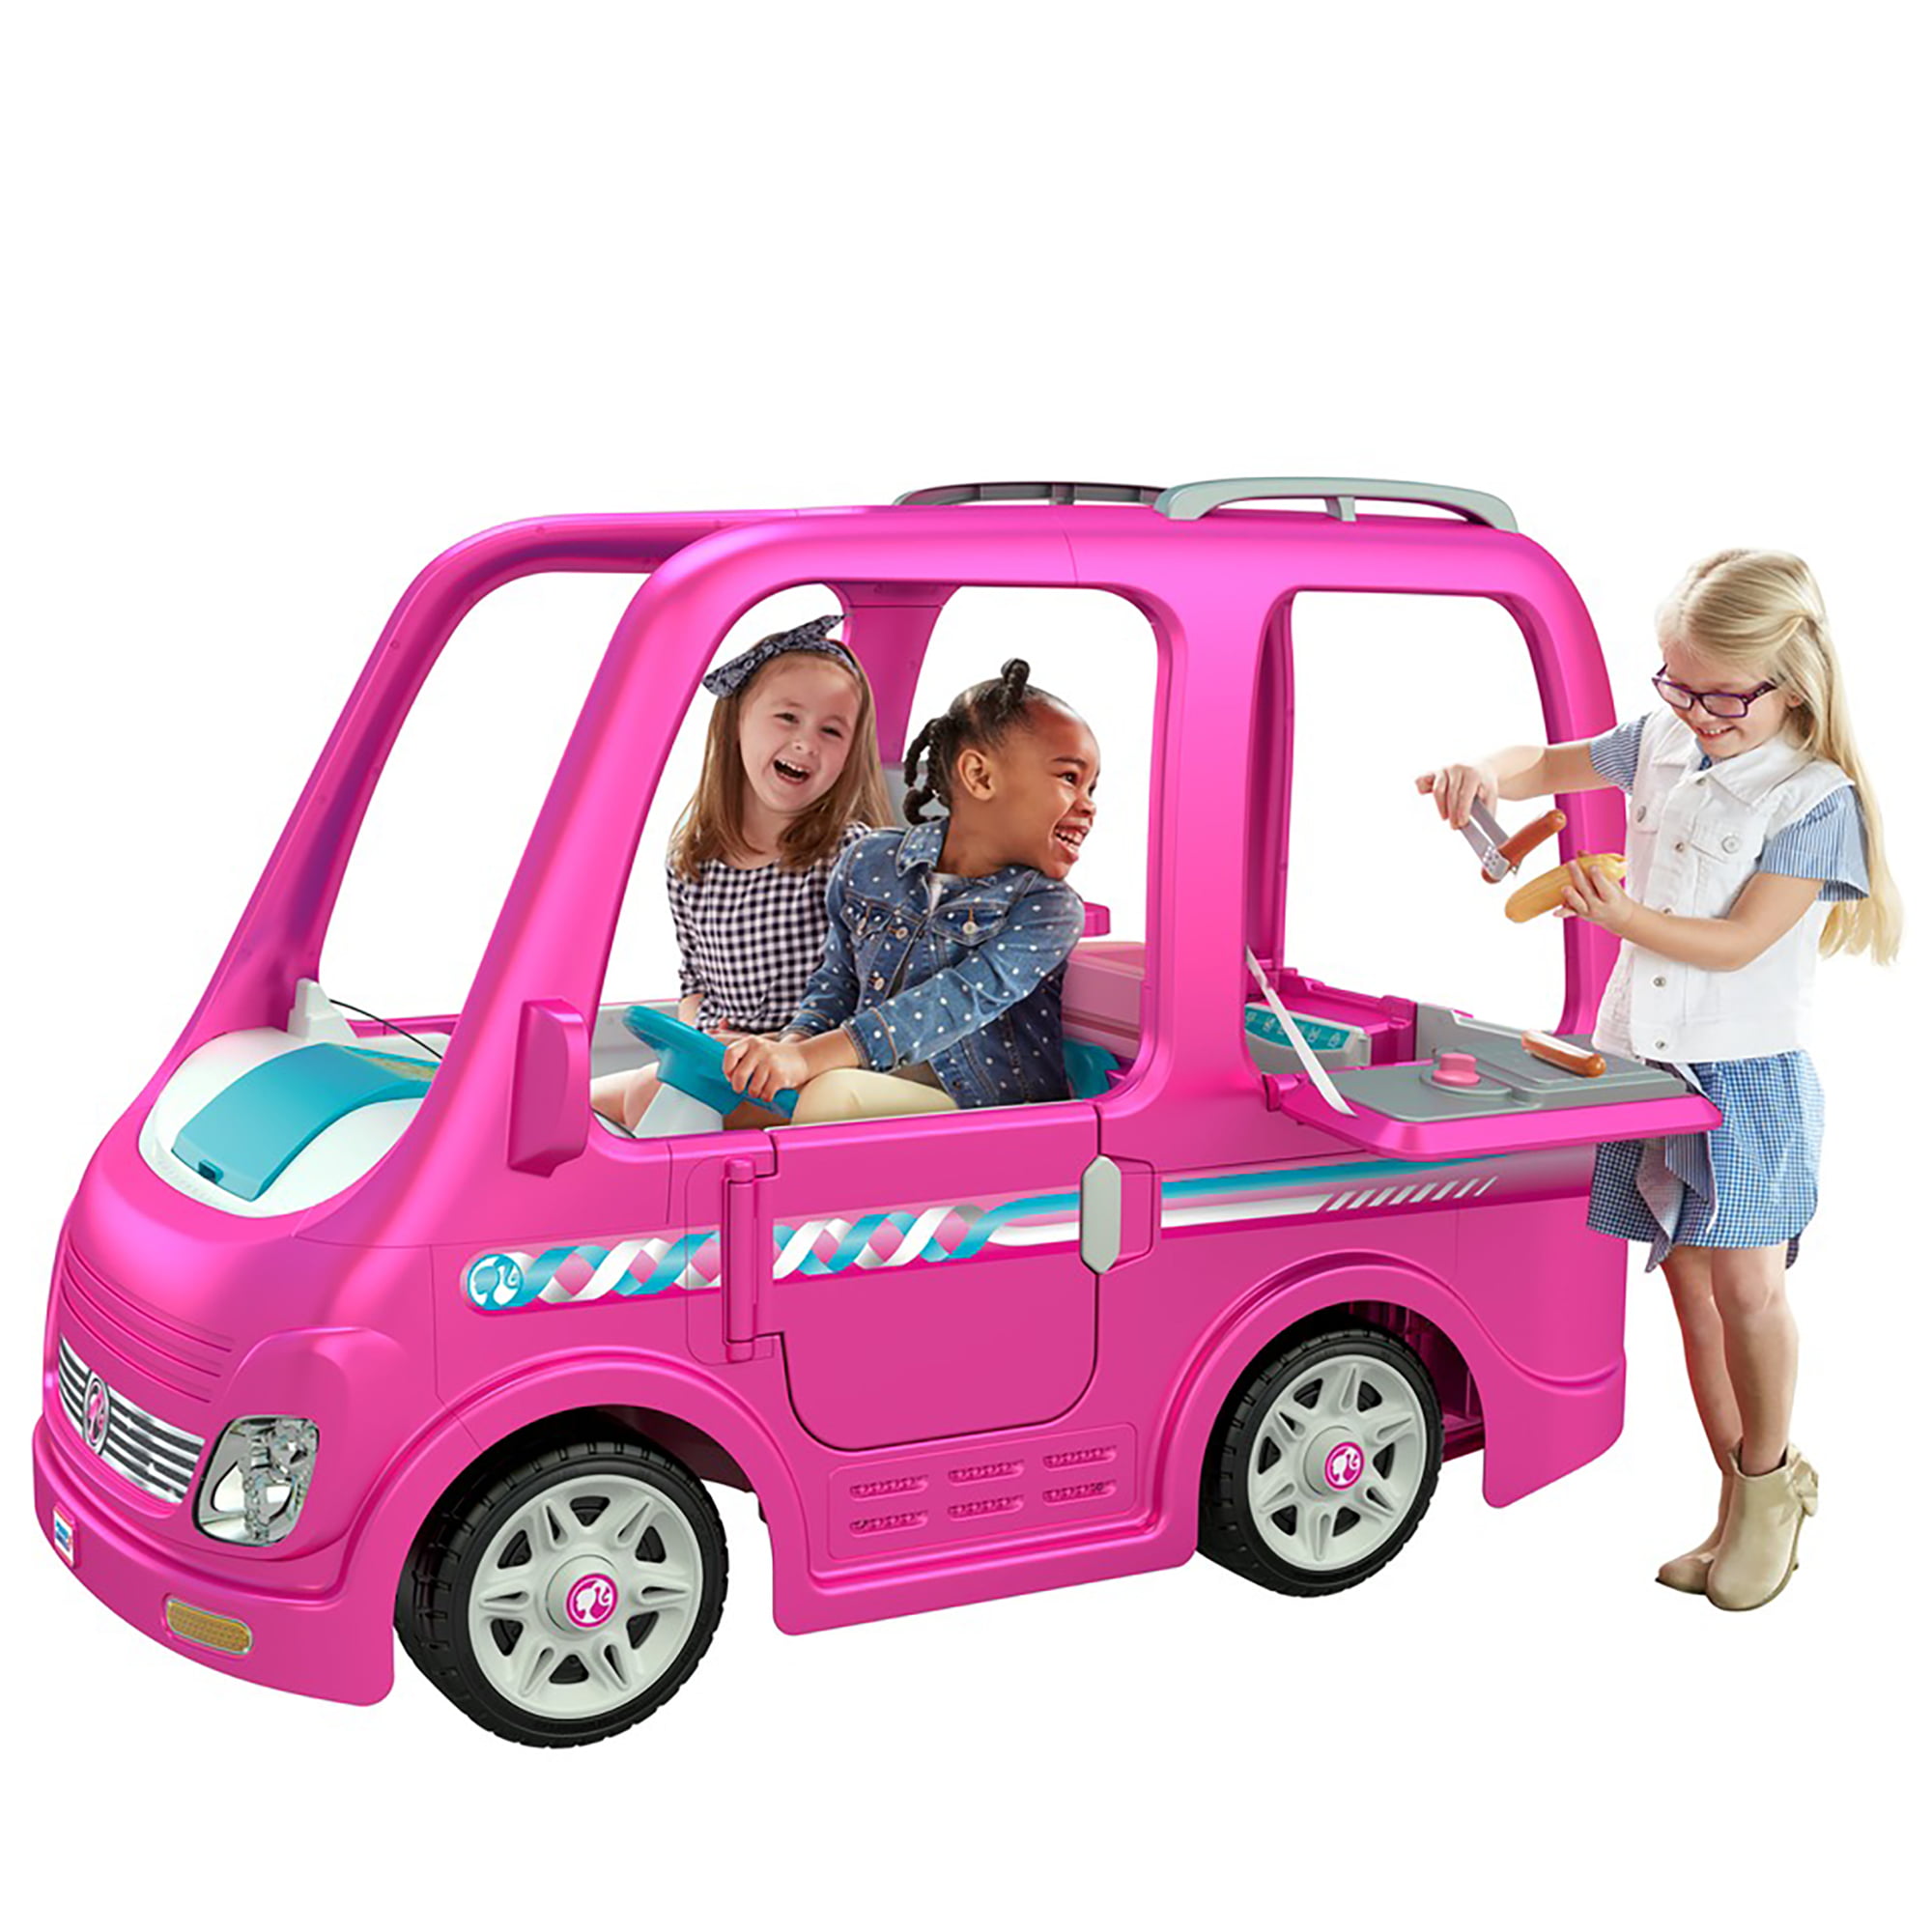 Power Wheels Barbie Dream Camper, Battery Powered Ride On Vehicle